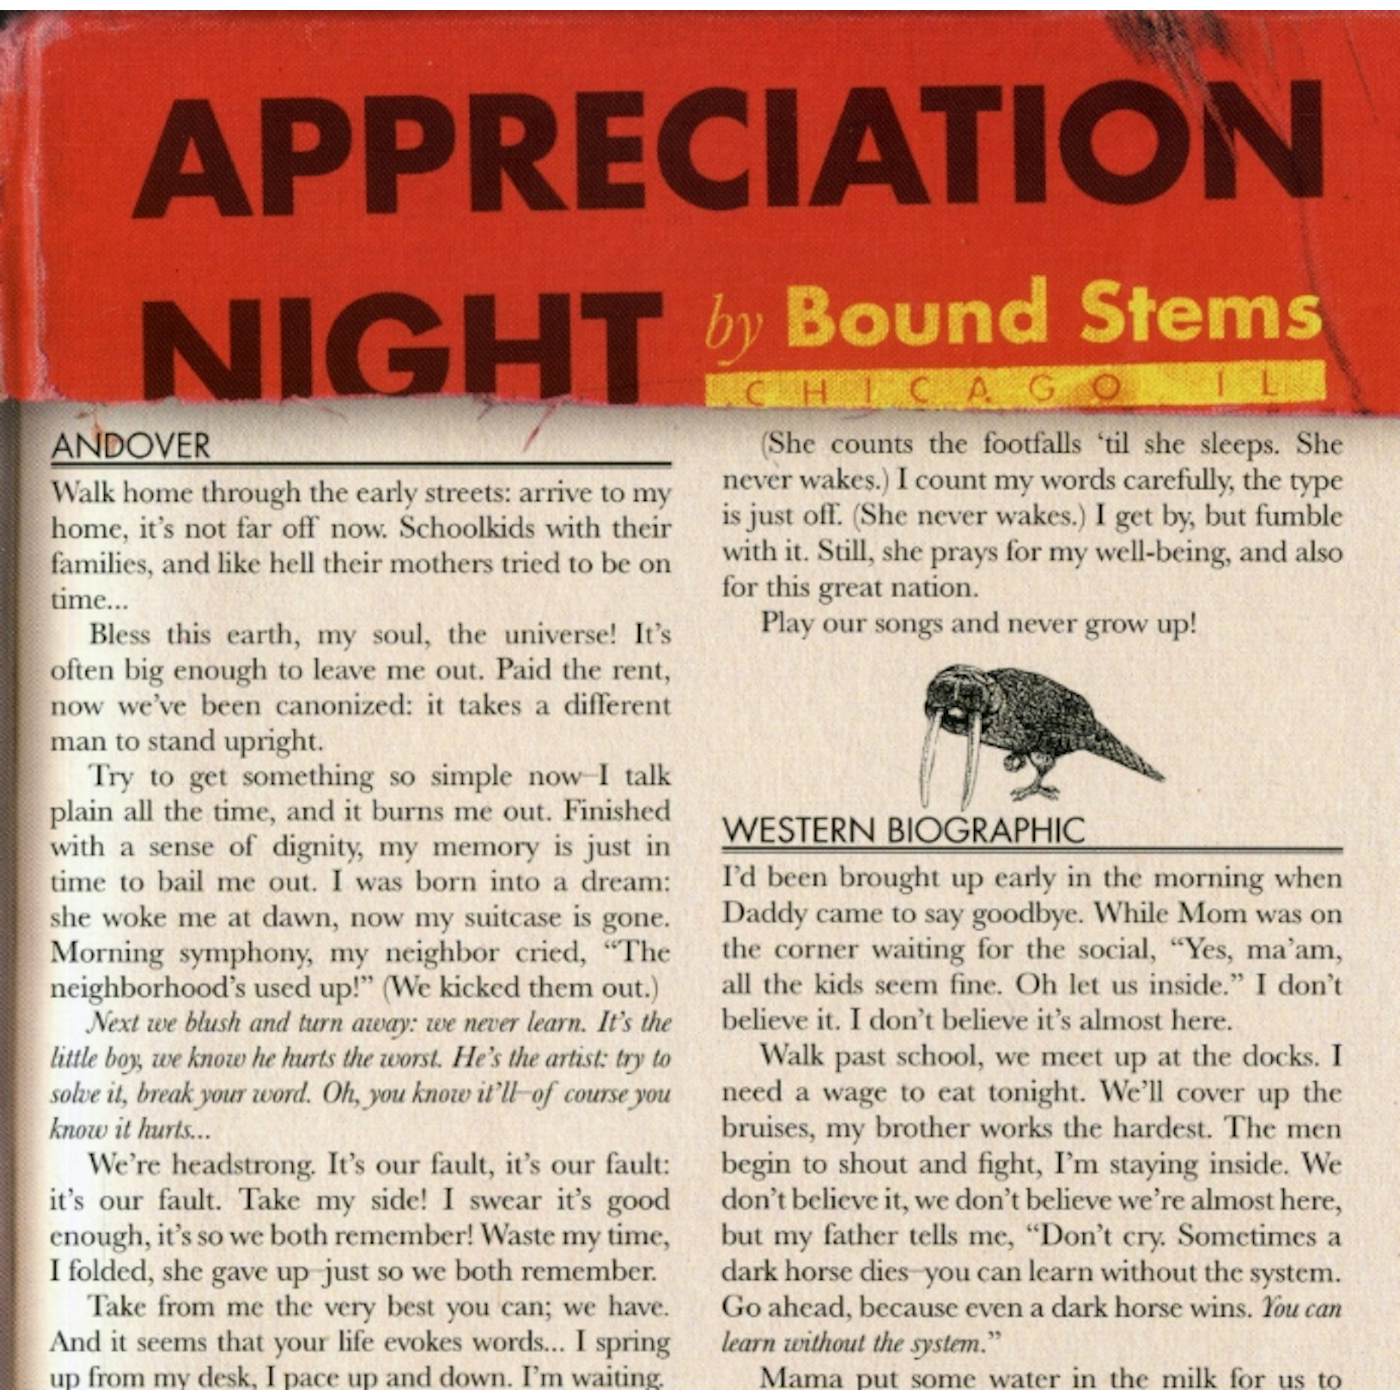 Bound Stems APPRECIATION NIGHT CD